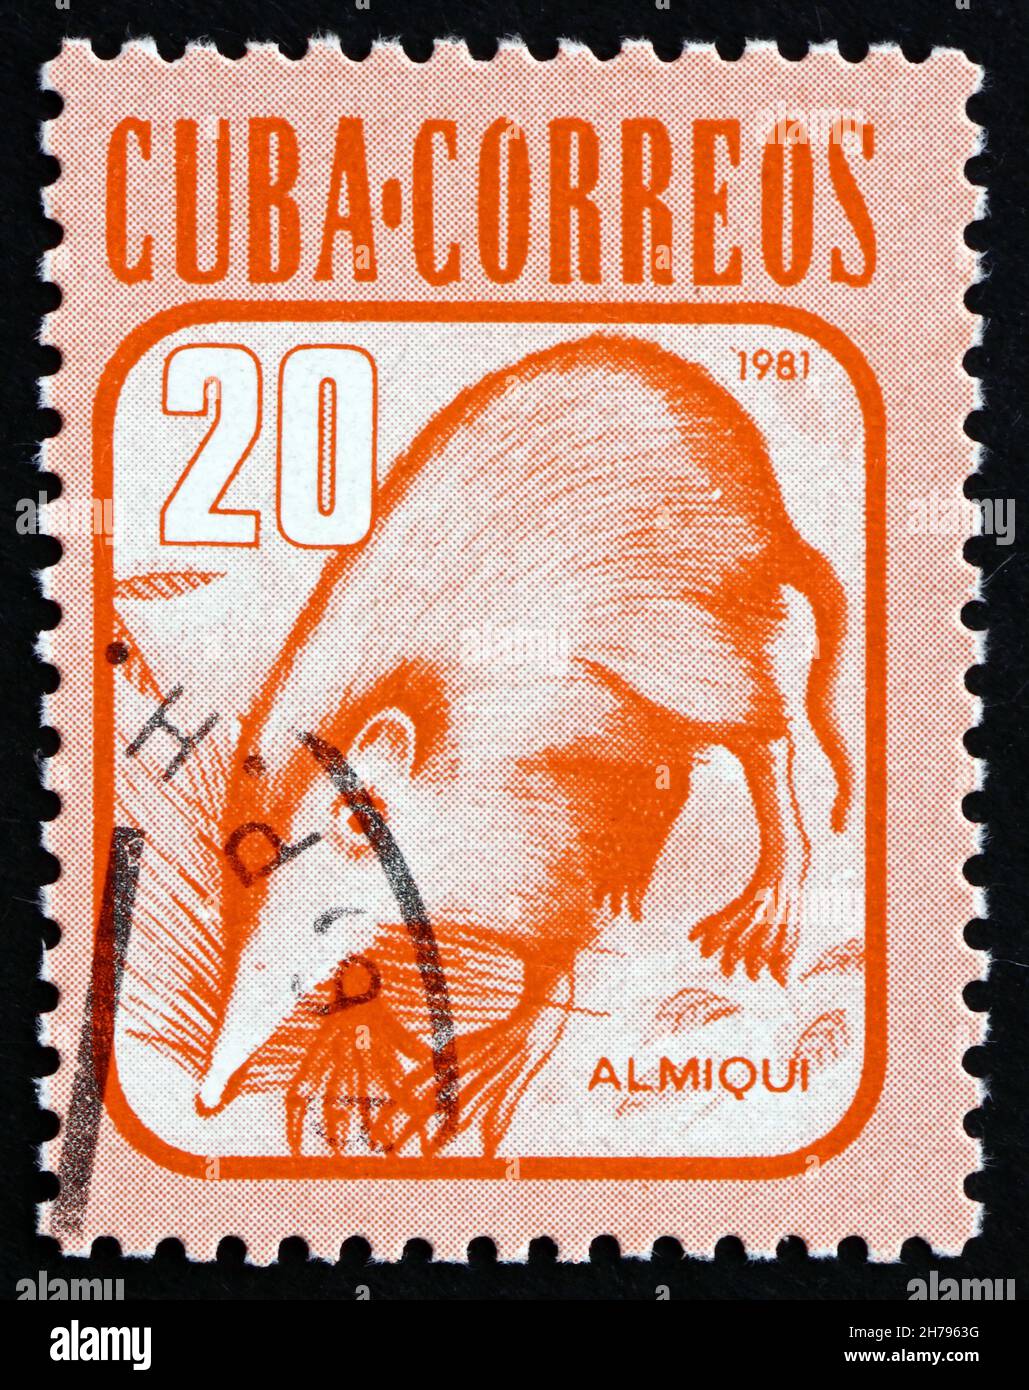 CUBA - CIRCA 1981: a stamp printed in the Cuba shows Almiqui, Cuban Solenodon, Solenodon Cubanus, Mammal Endemic to Cuba, circa 1981 Stock Photo